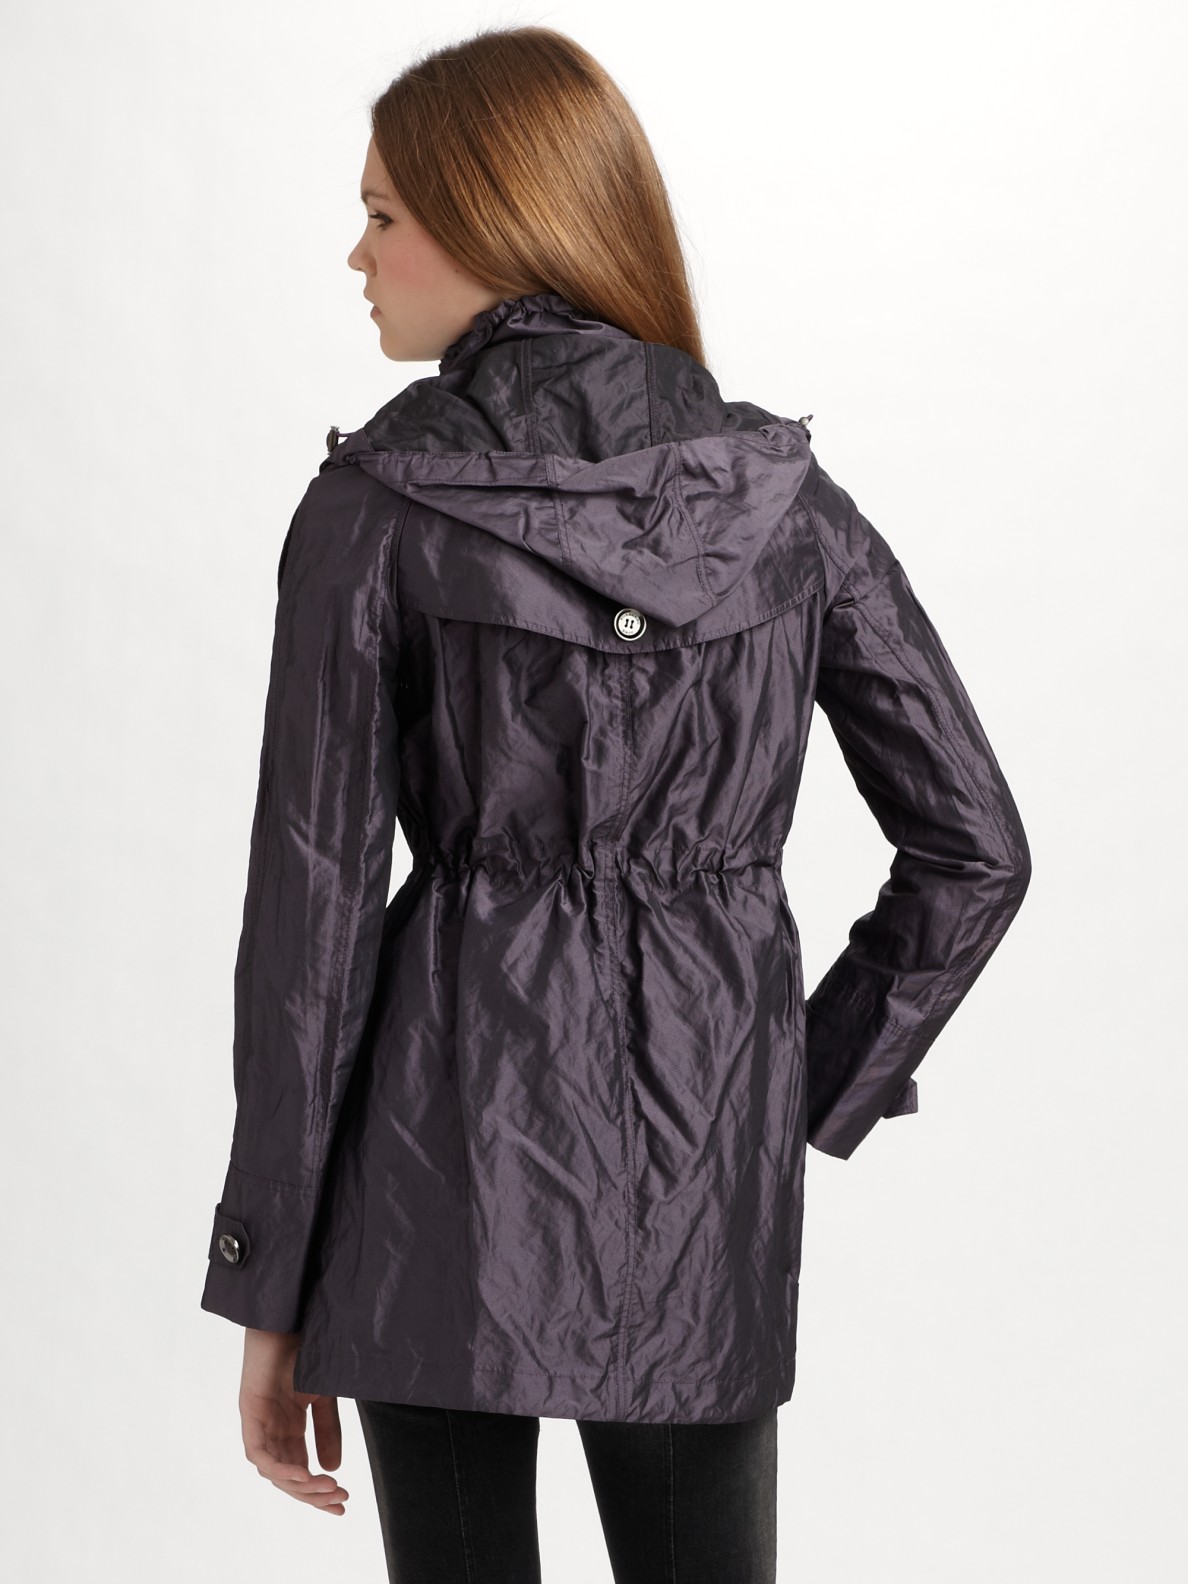 Burberry Women's Raincoat With Hood 